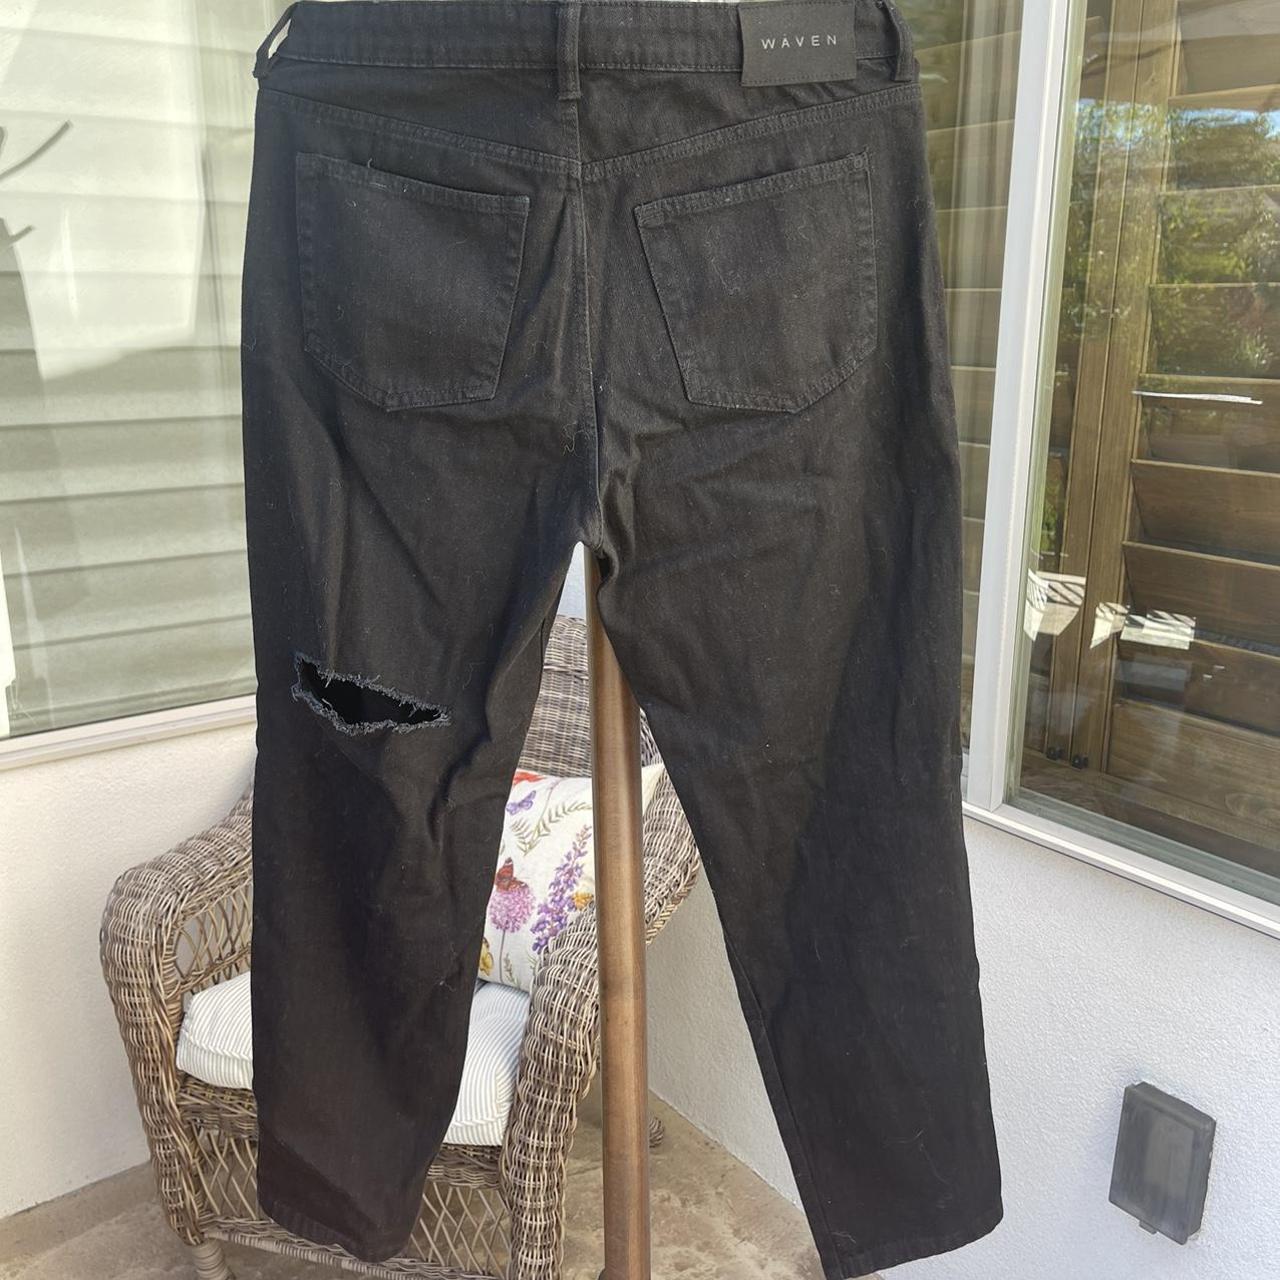 Product Image 2 - WAVEN black jean
Size 29
Worn 1-2